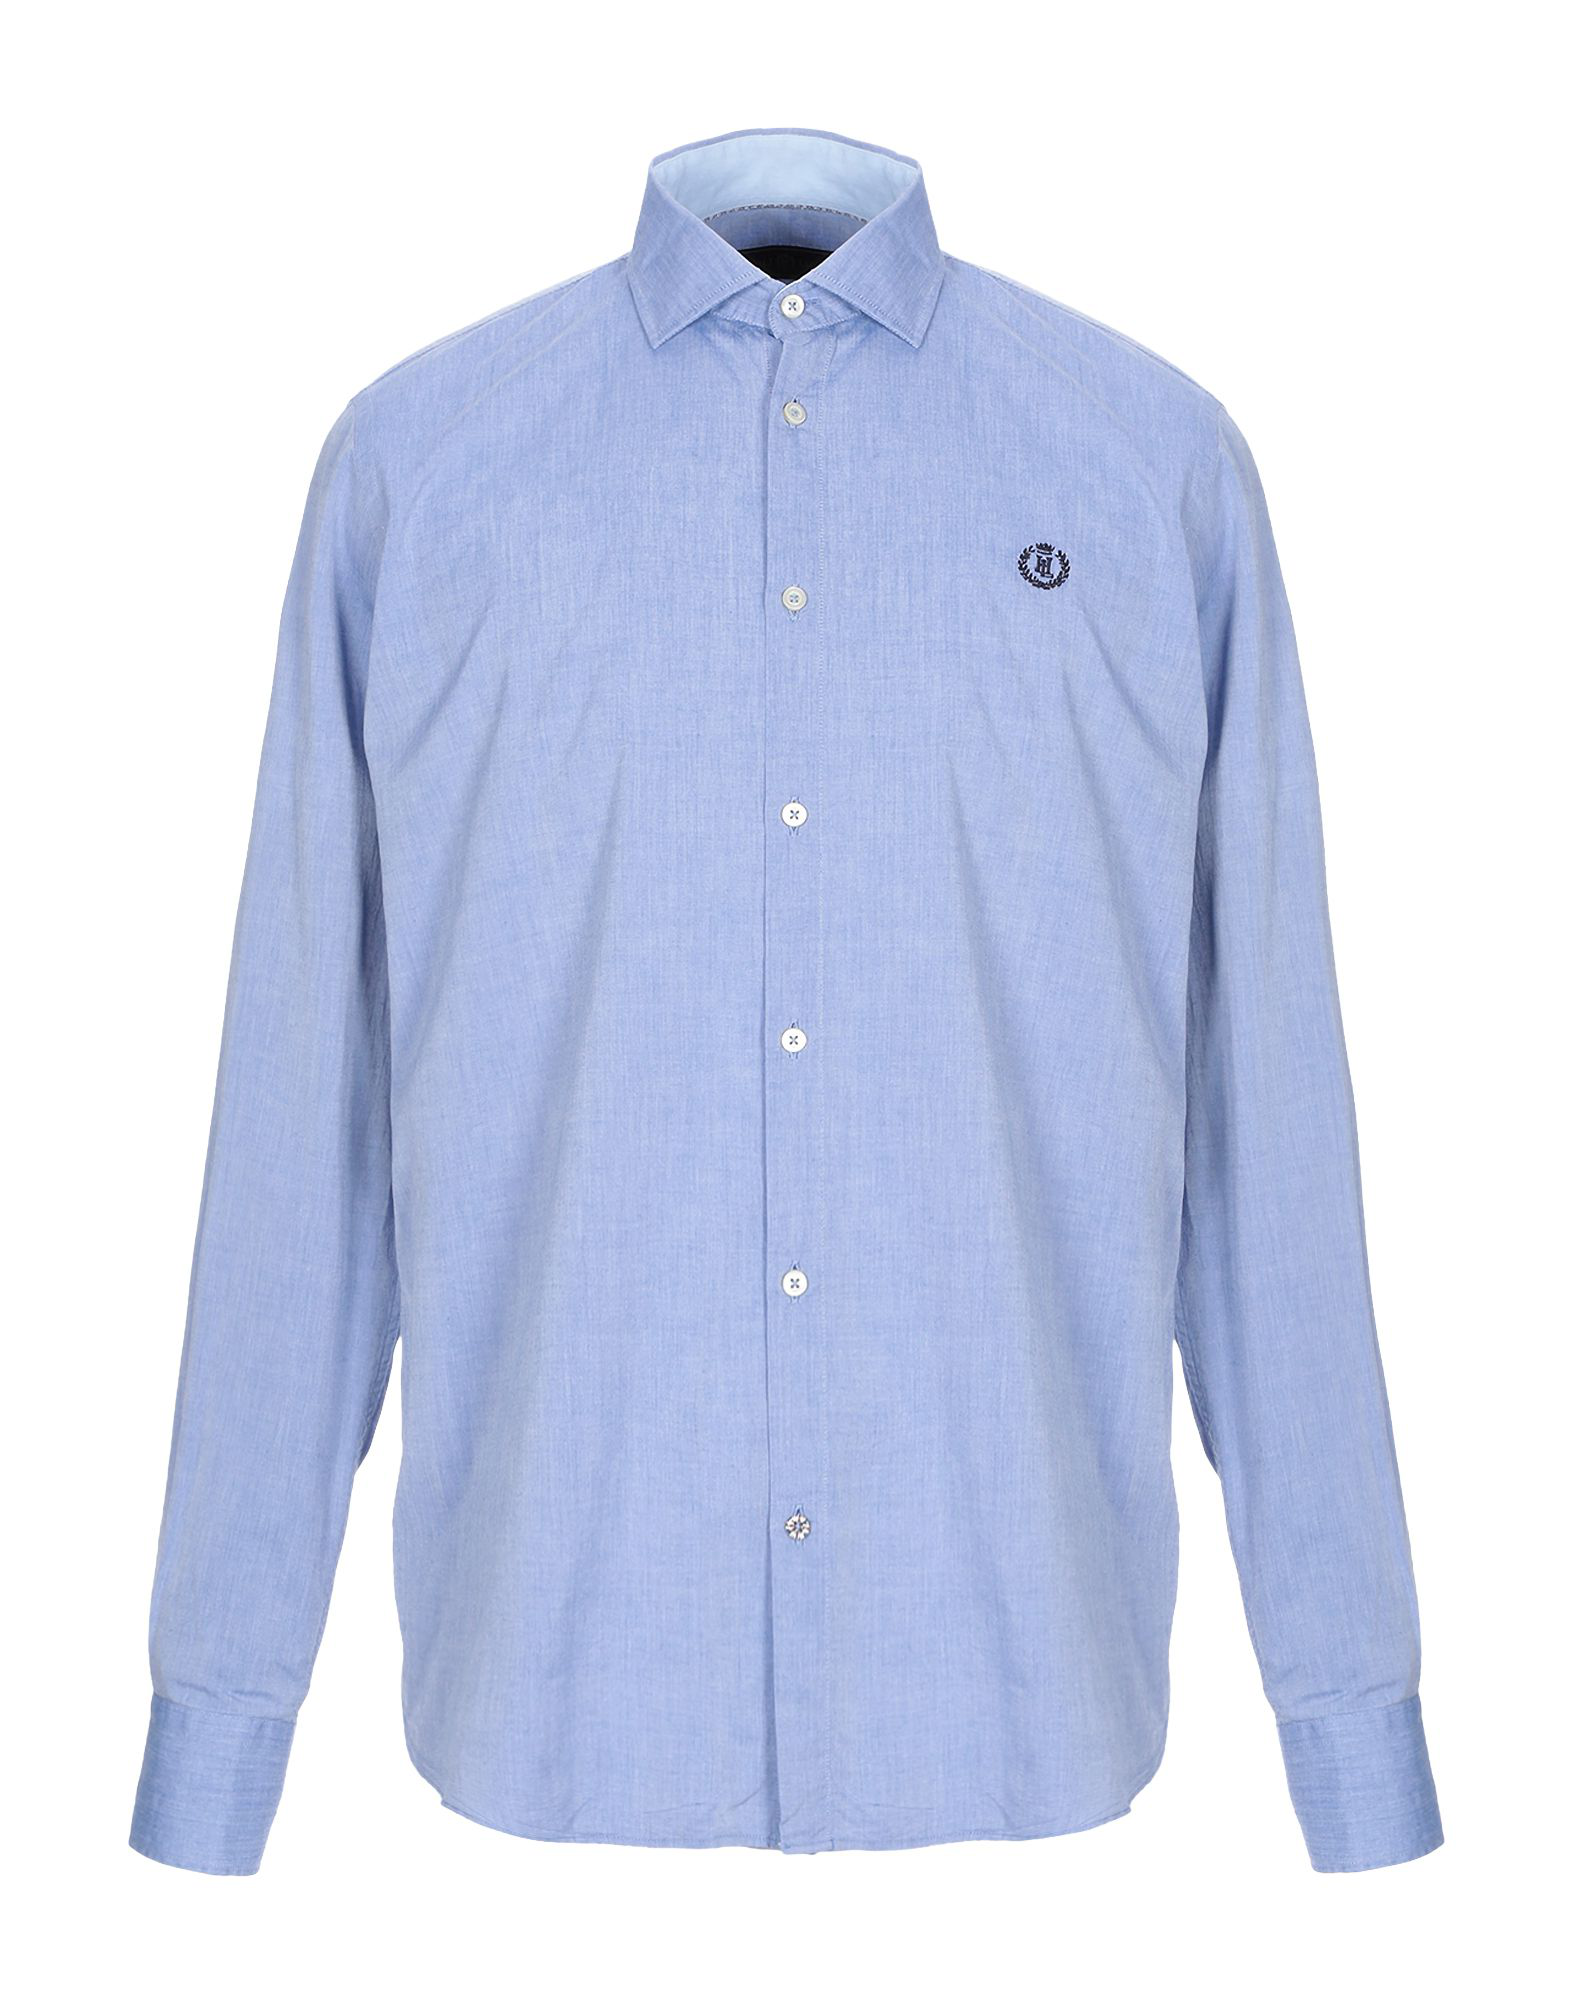 Henri Lloyd Shirts In Pastel Blue | ModeSens